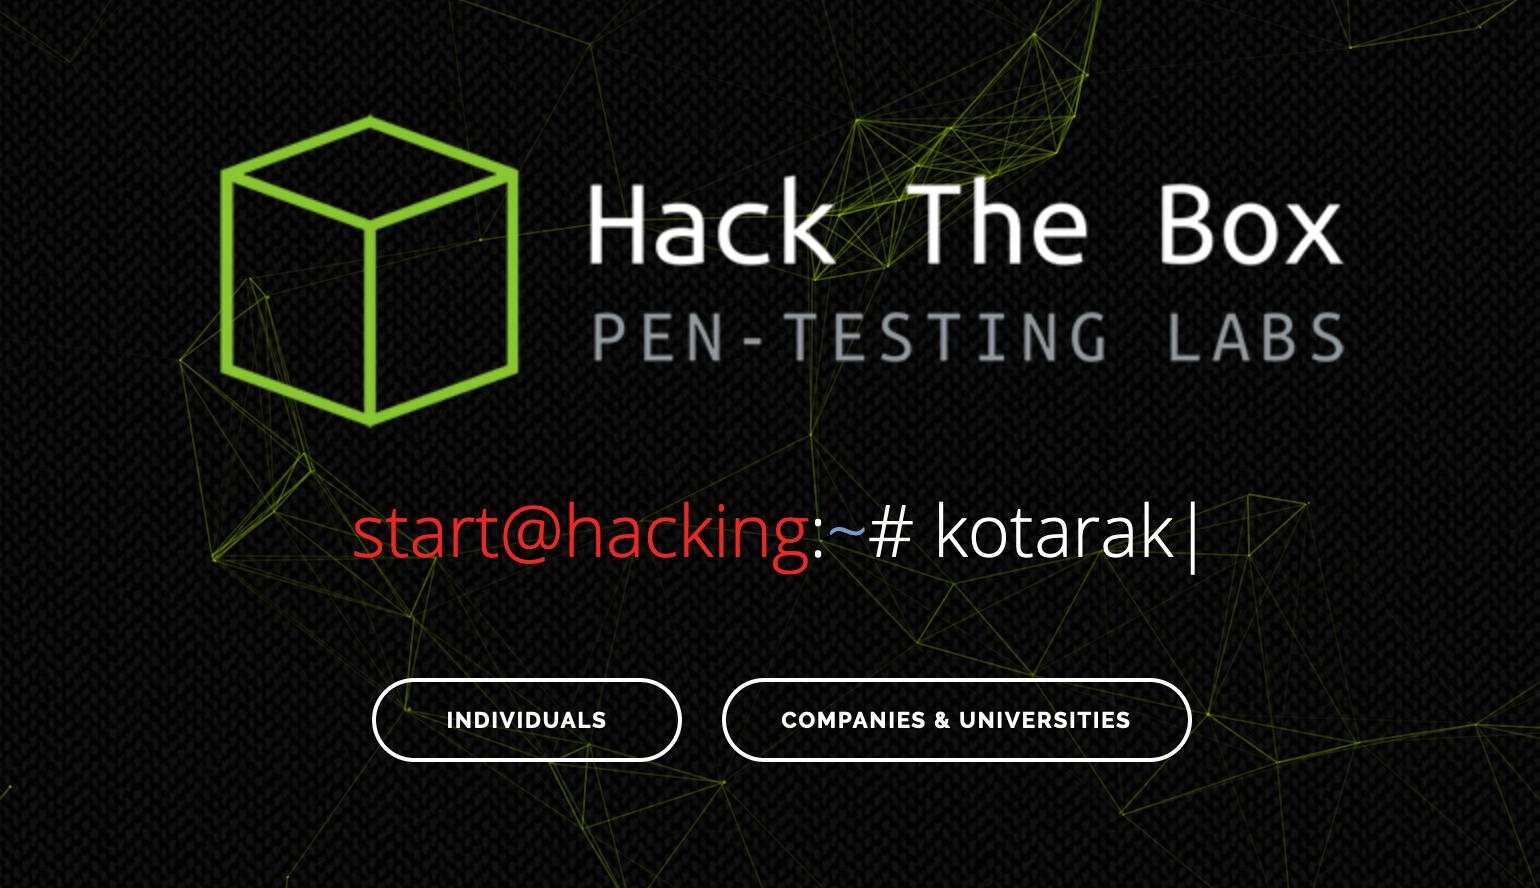 hack-the-box-screenshot.png